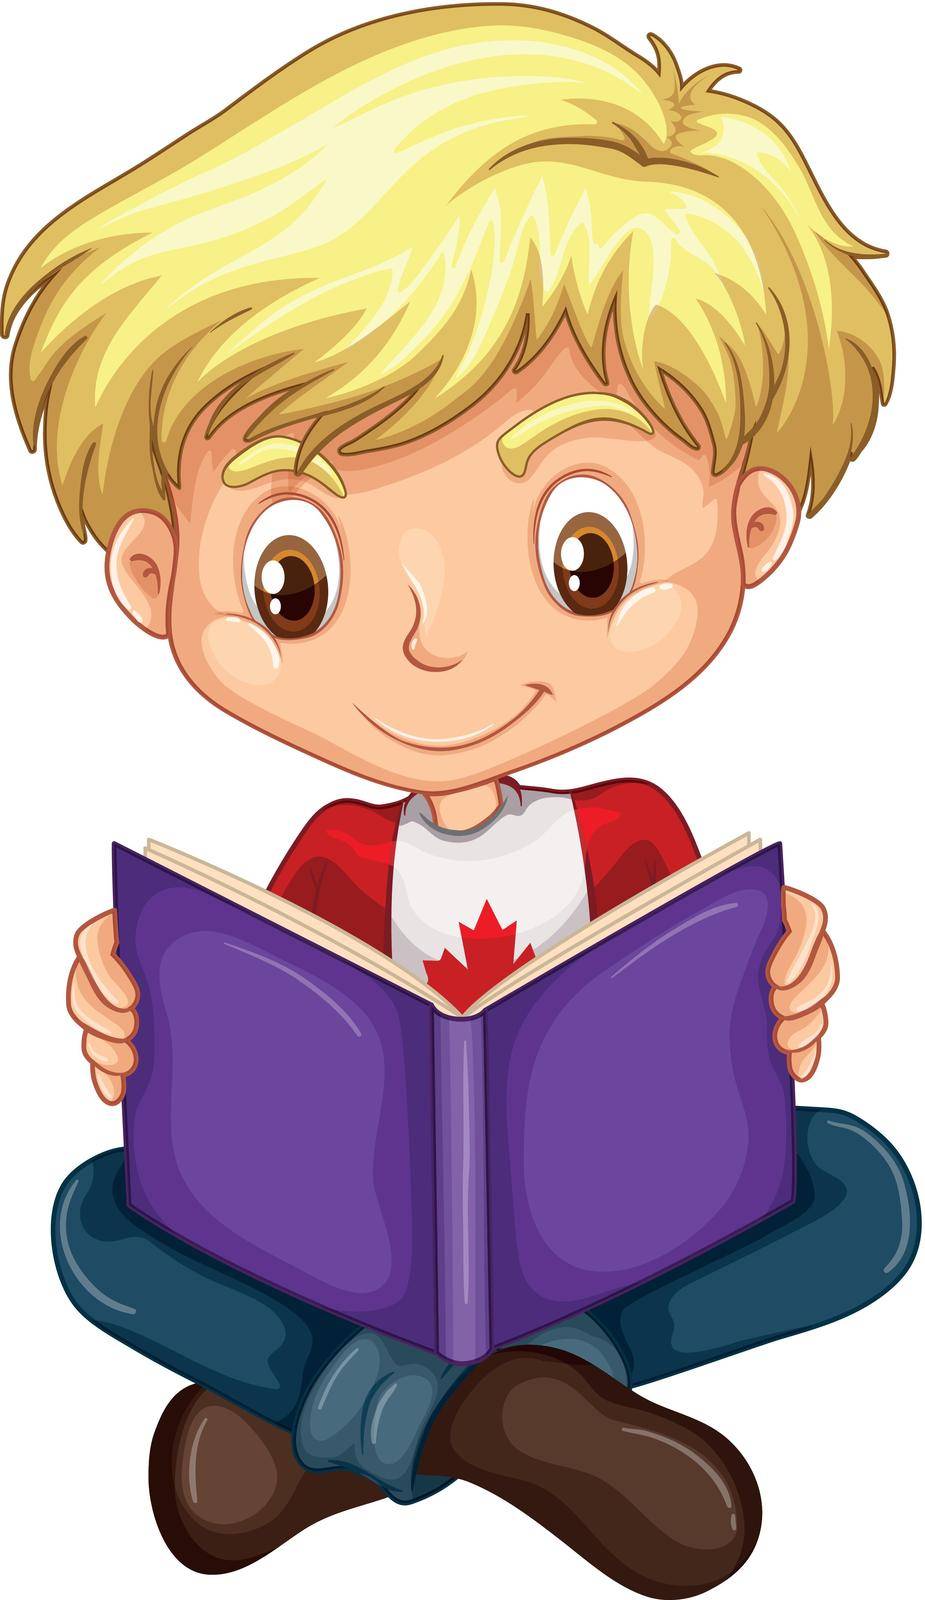 Canadian boy reading a book illustration